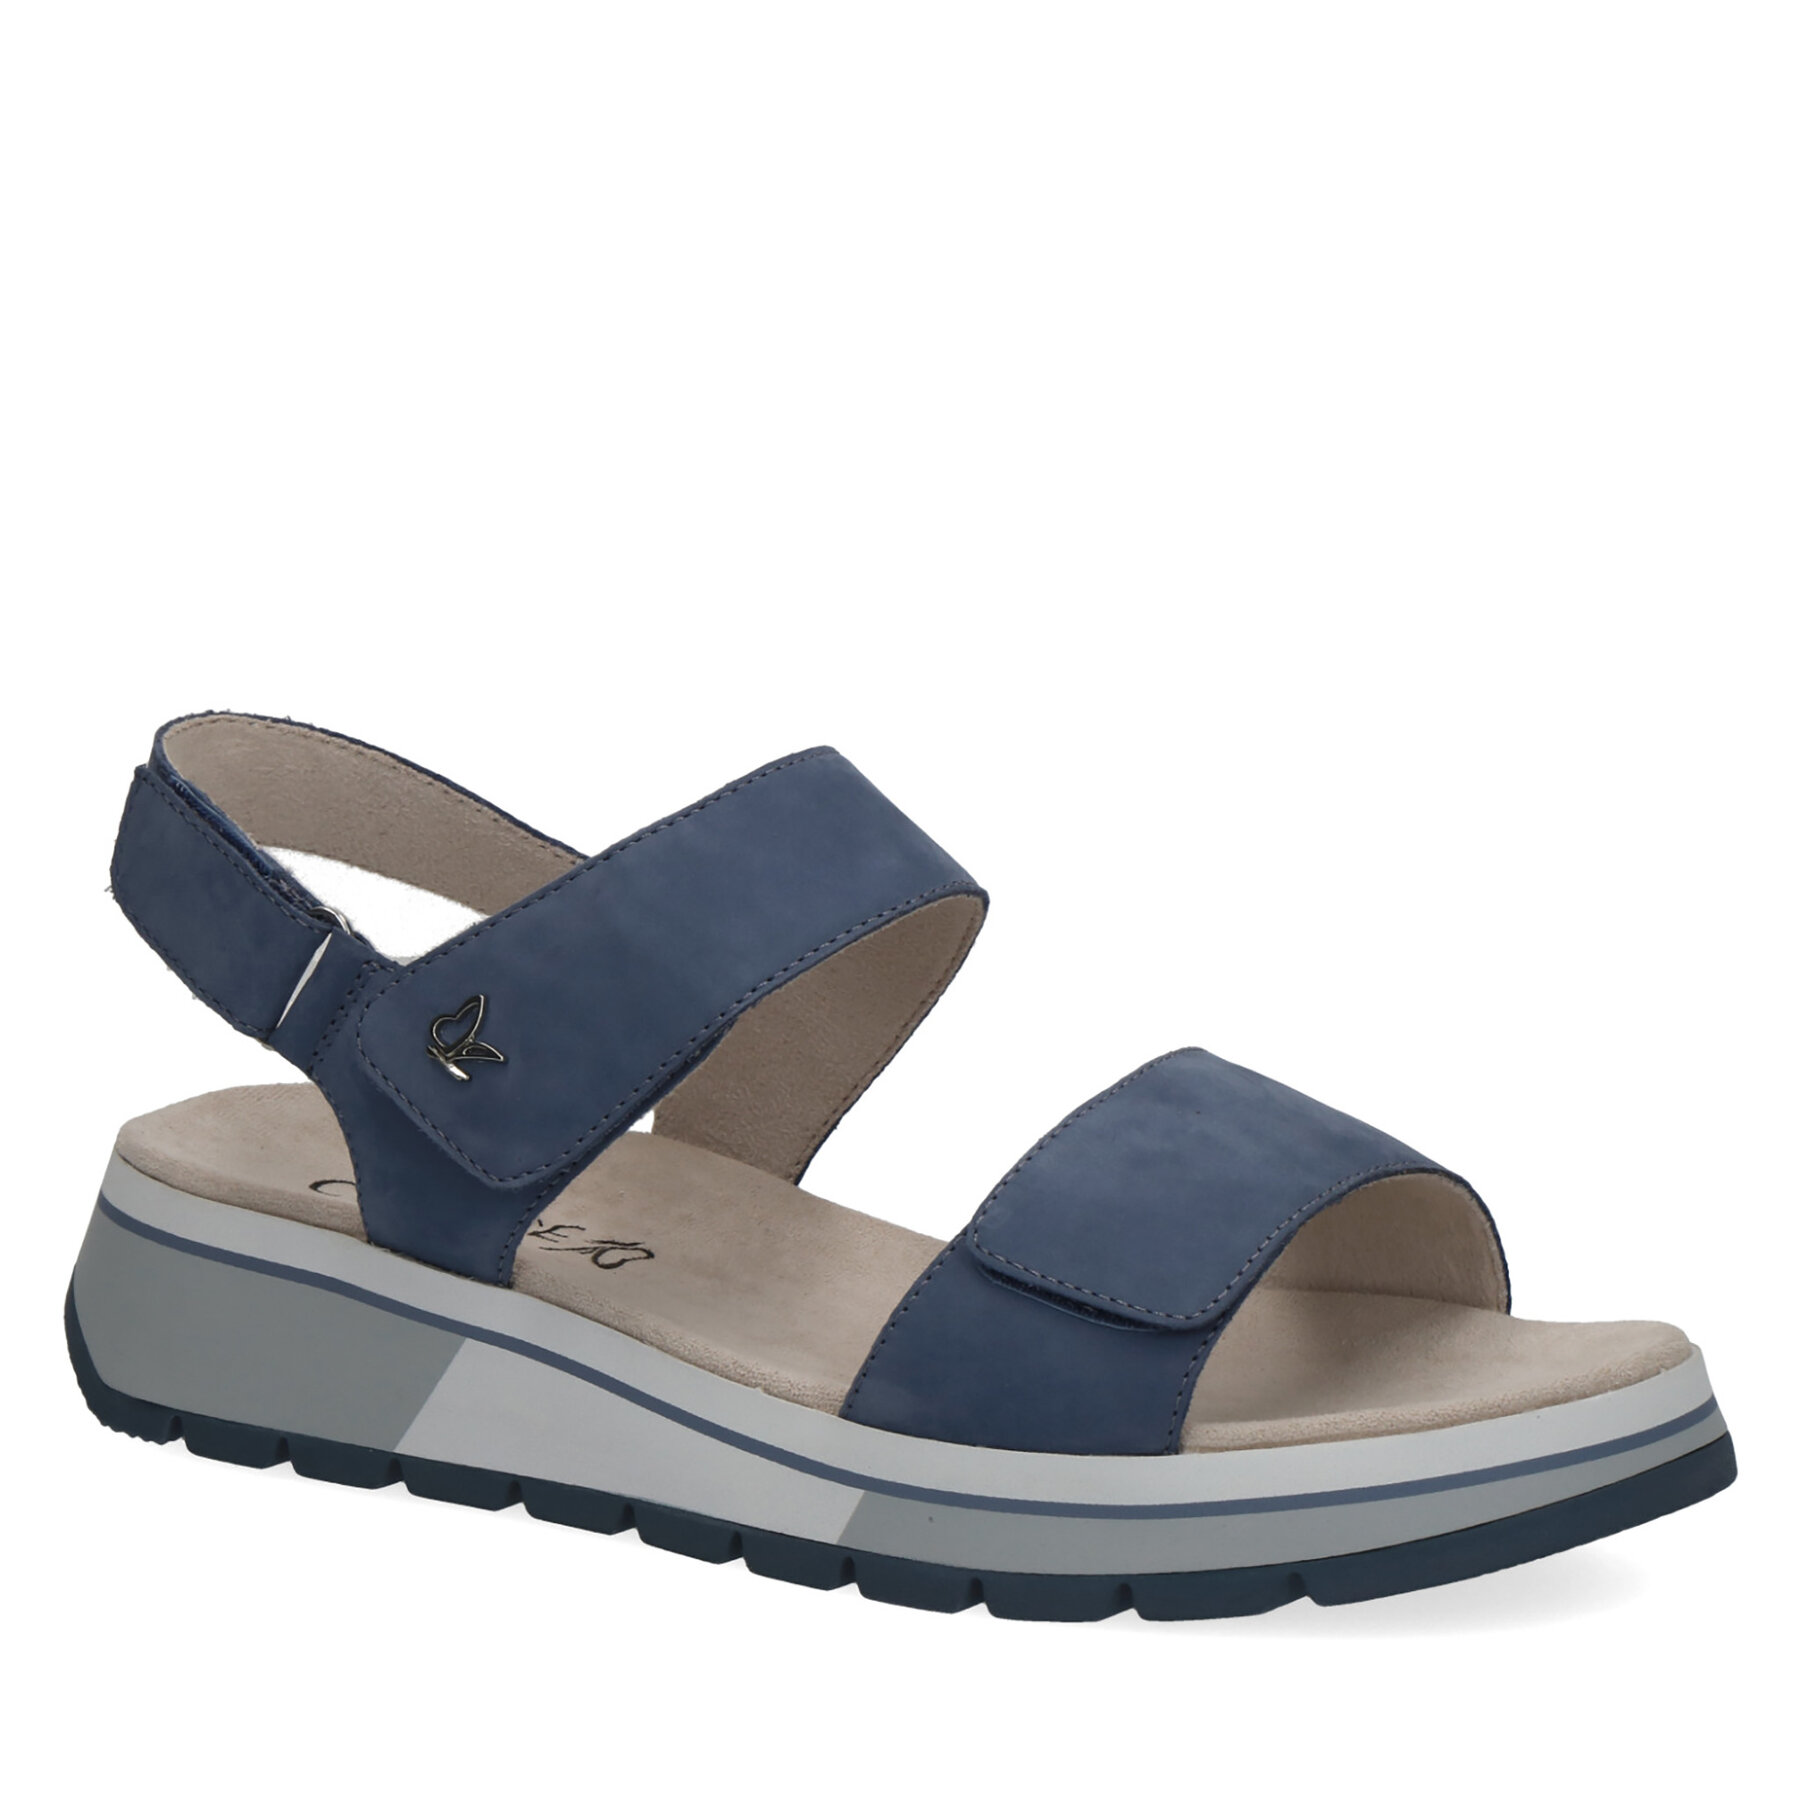 Sandale Caprice 9-28705-20 Jeans Nubuc 895